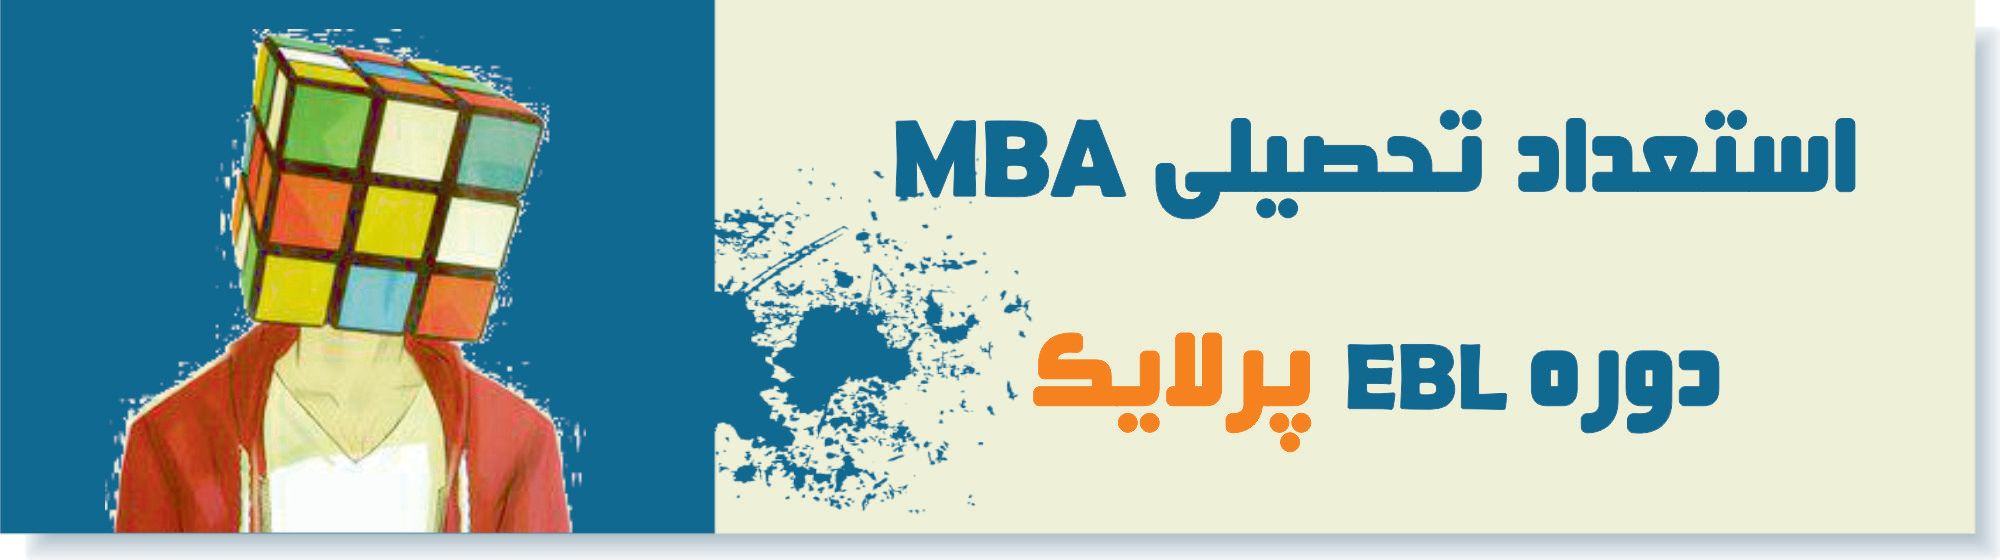 MBA GMAT